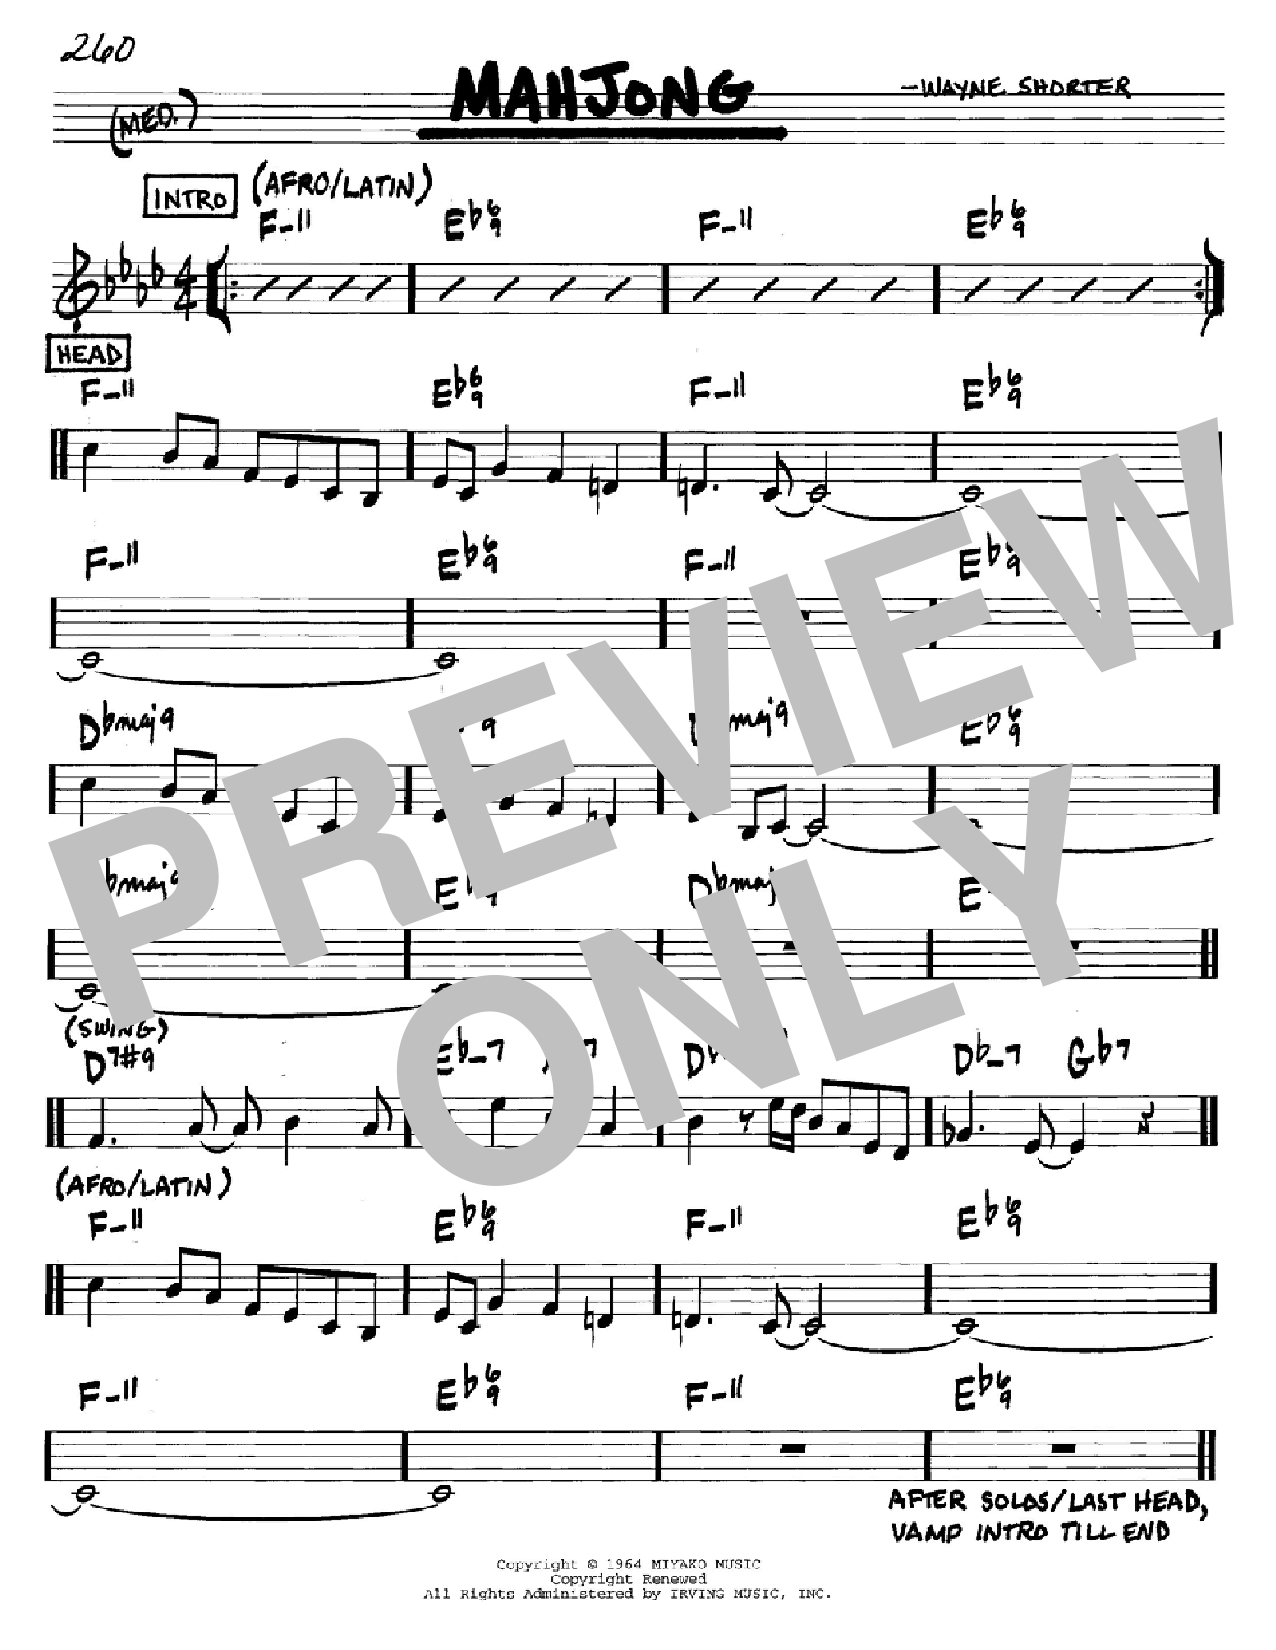 Wayne Shorter Mahjong Sheet Music Notes & Chords for Tenor Sax Transcription - Download or Print PDF